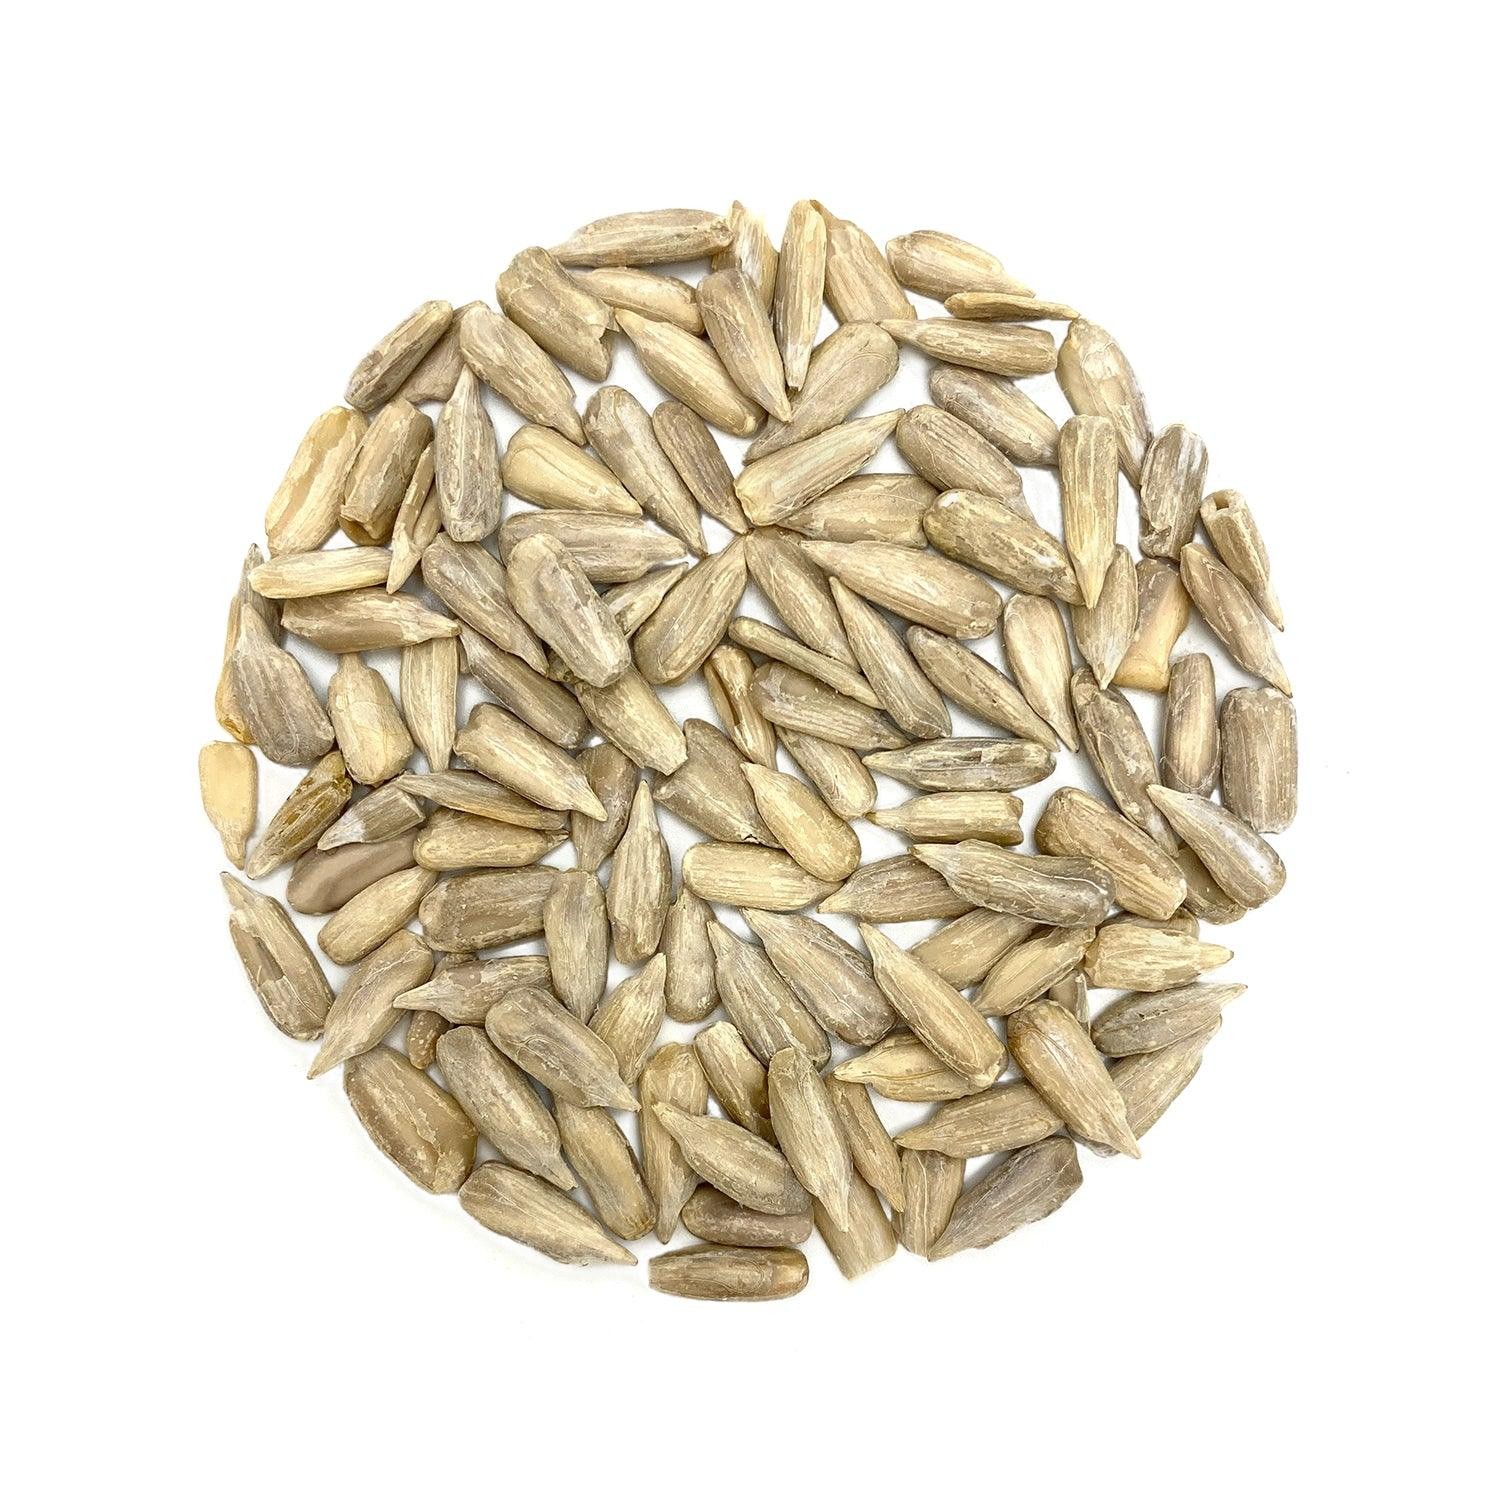 Healthy Snack Ideas: Sunflower seeds